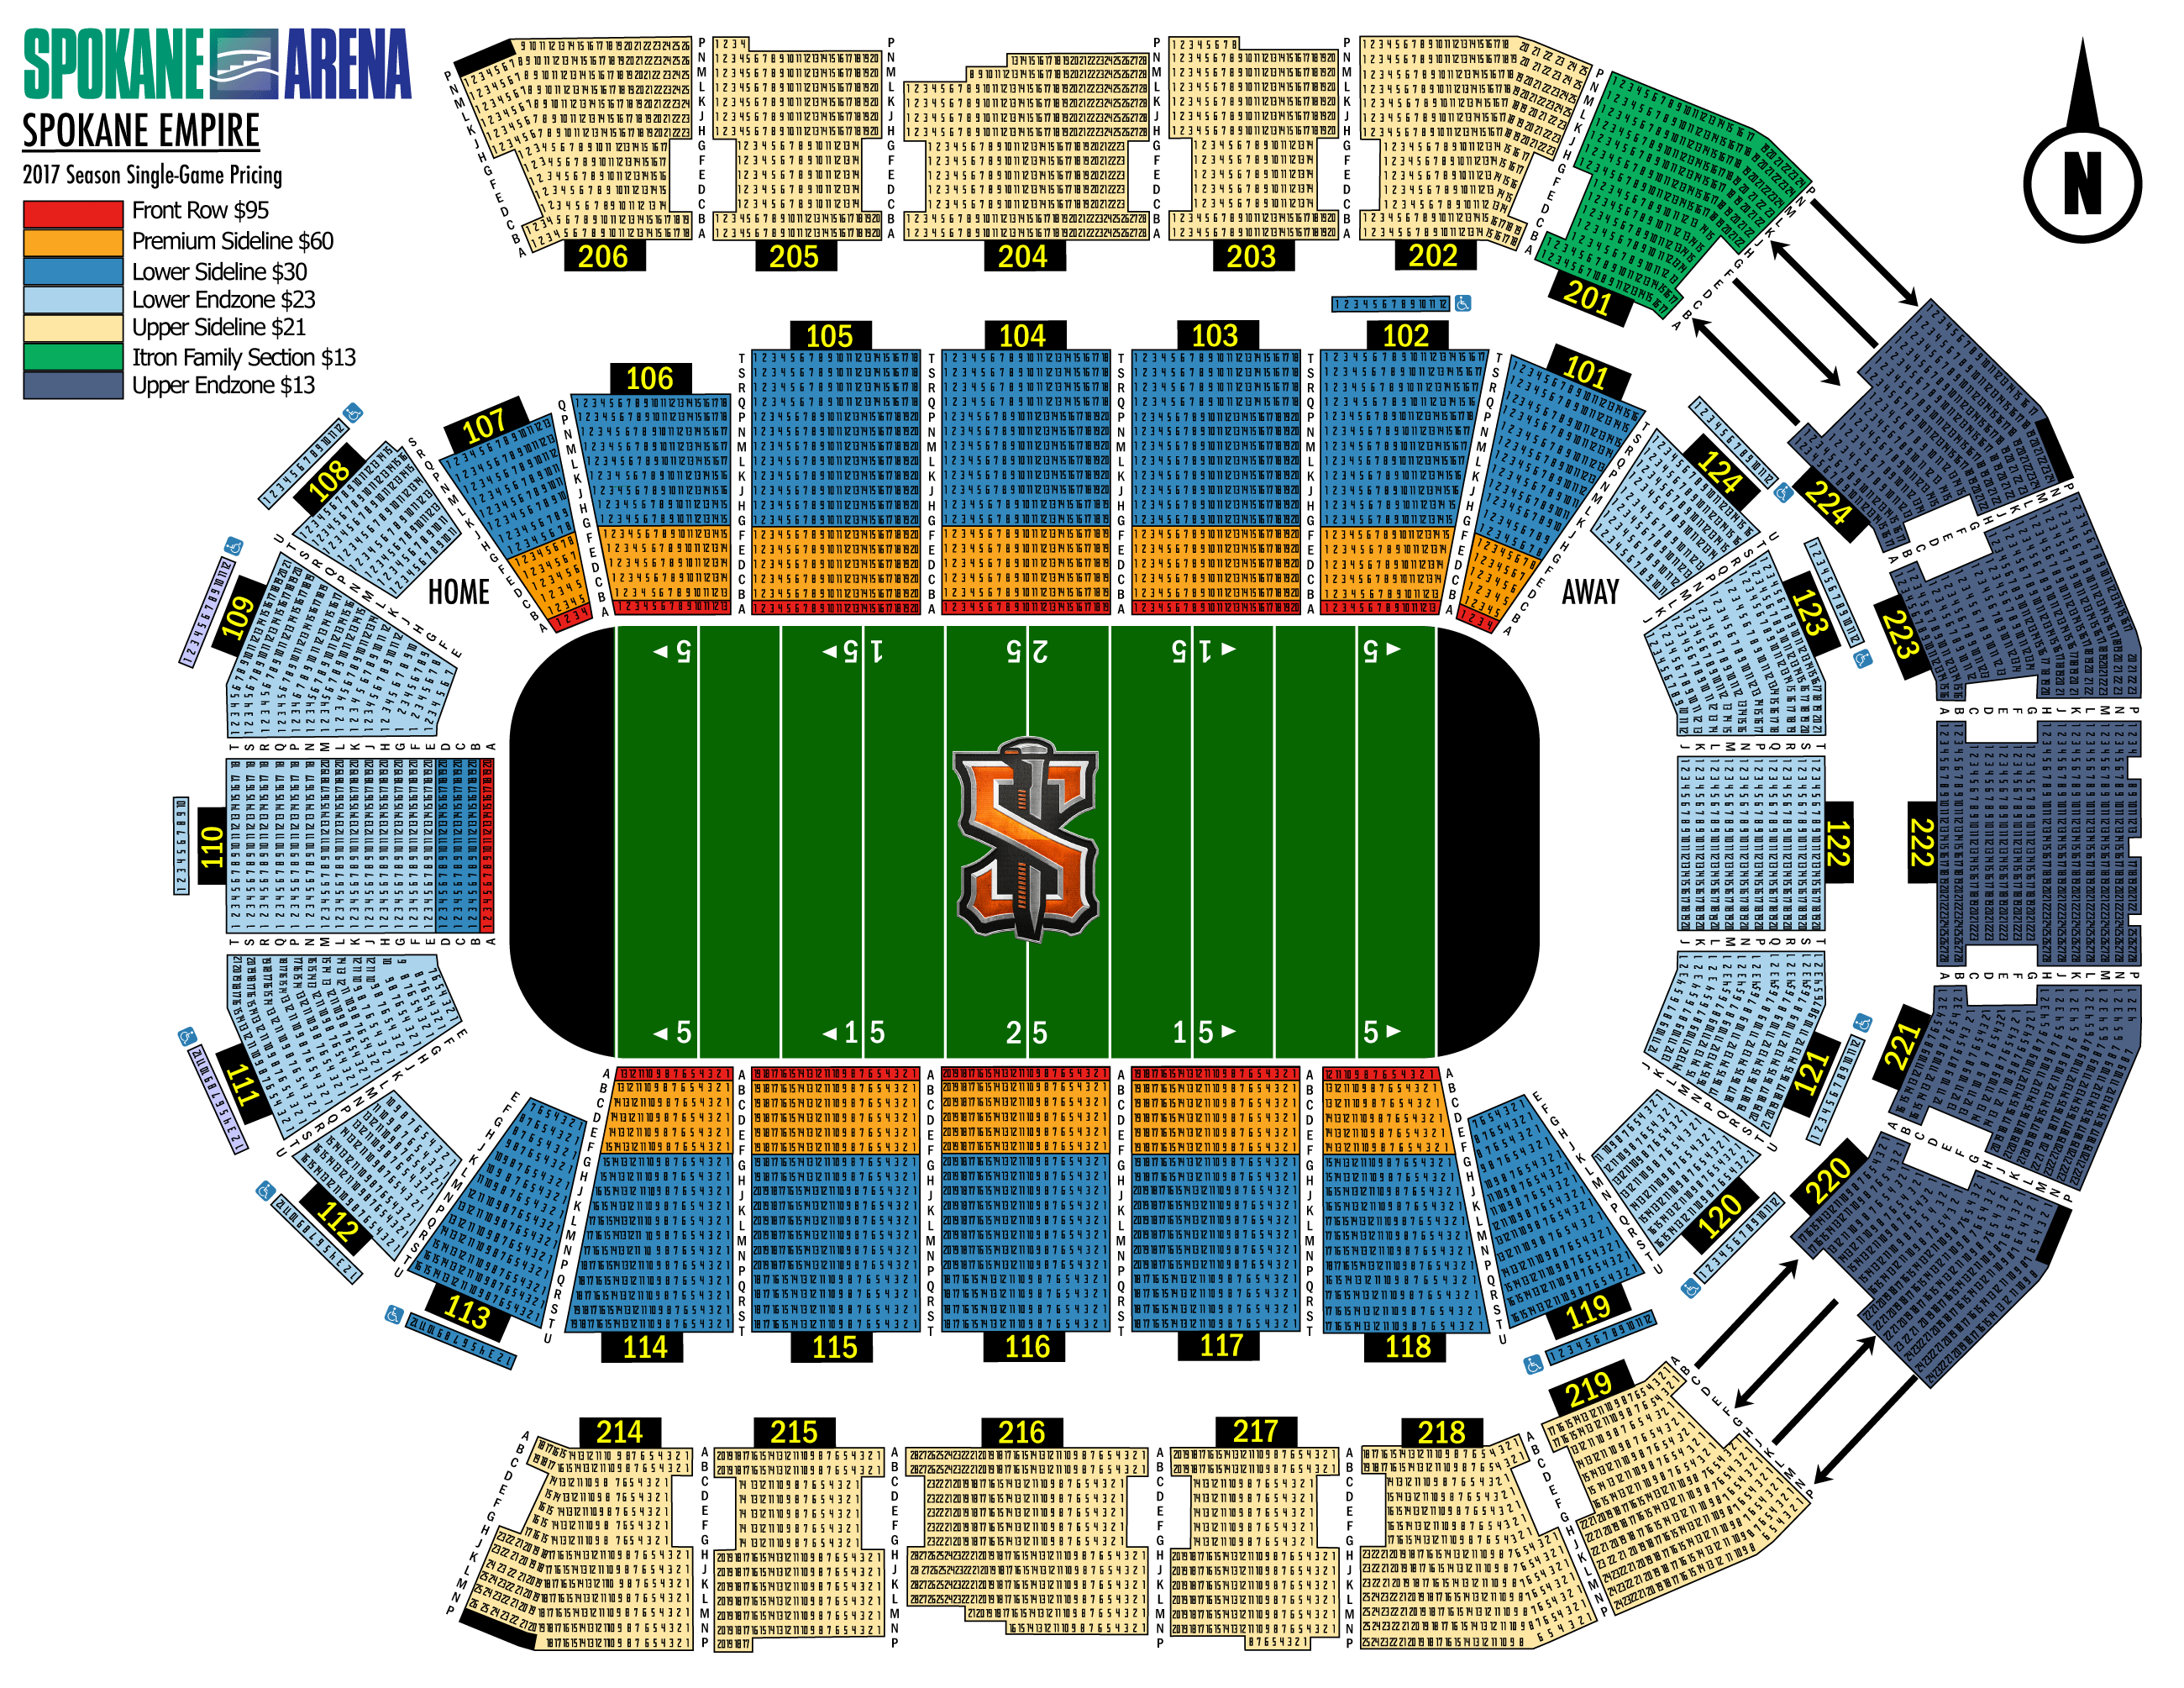 Spokane Arena Seating Map 4501